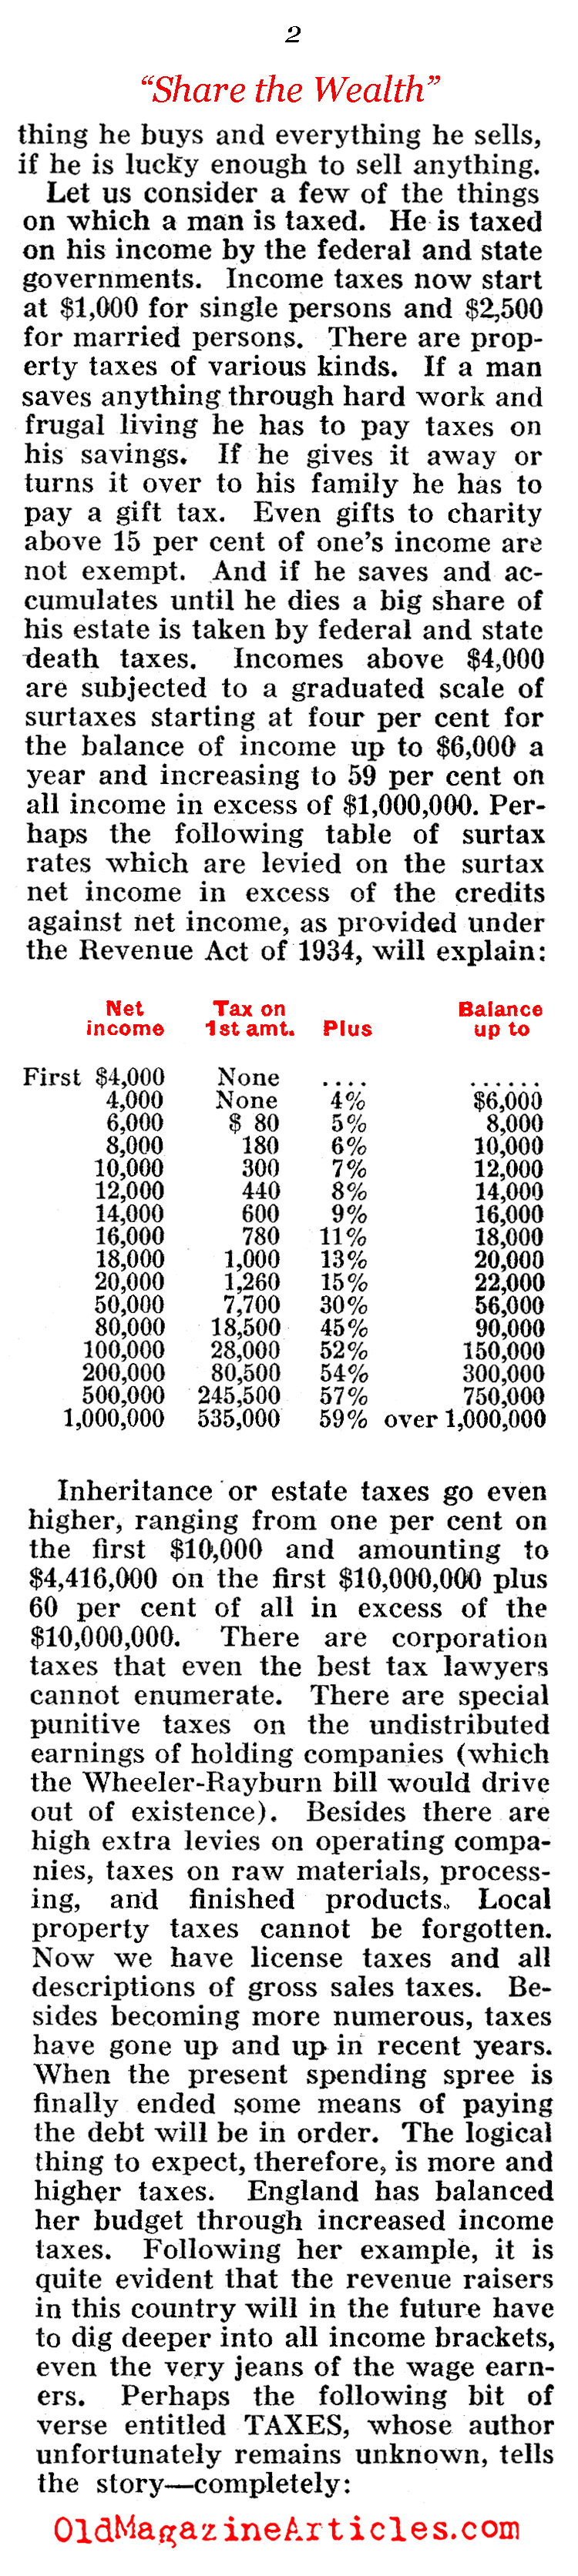 Distributing the Nation's Wealth... (Pathfinder Magazine, 1935)